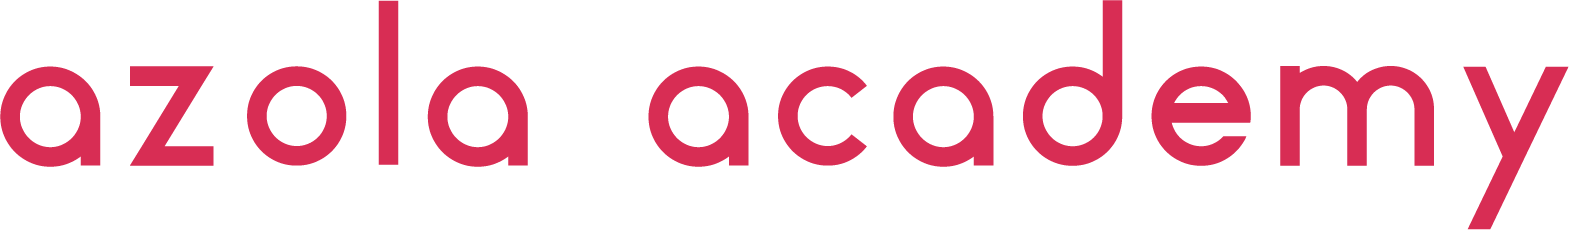 Azola Academy logo powered by Azola Creative